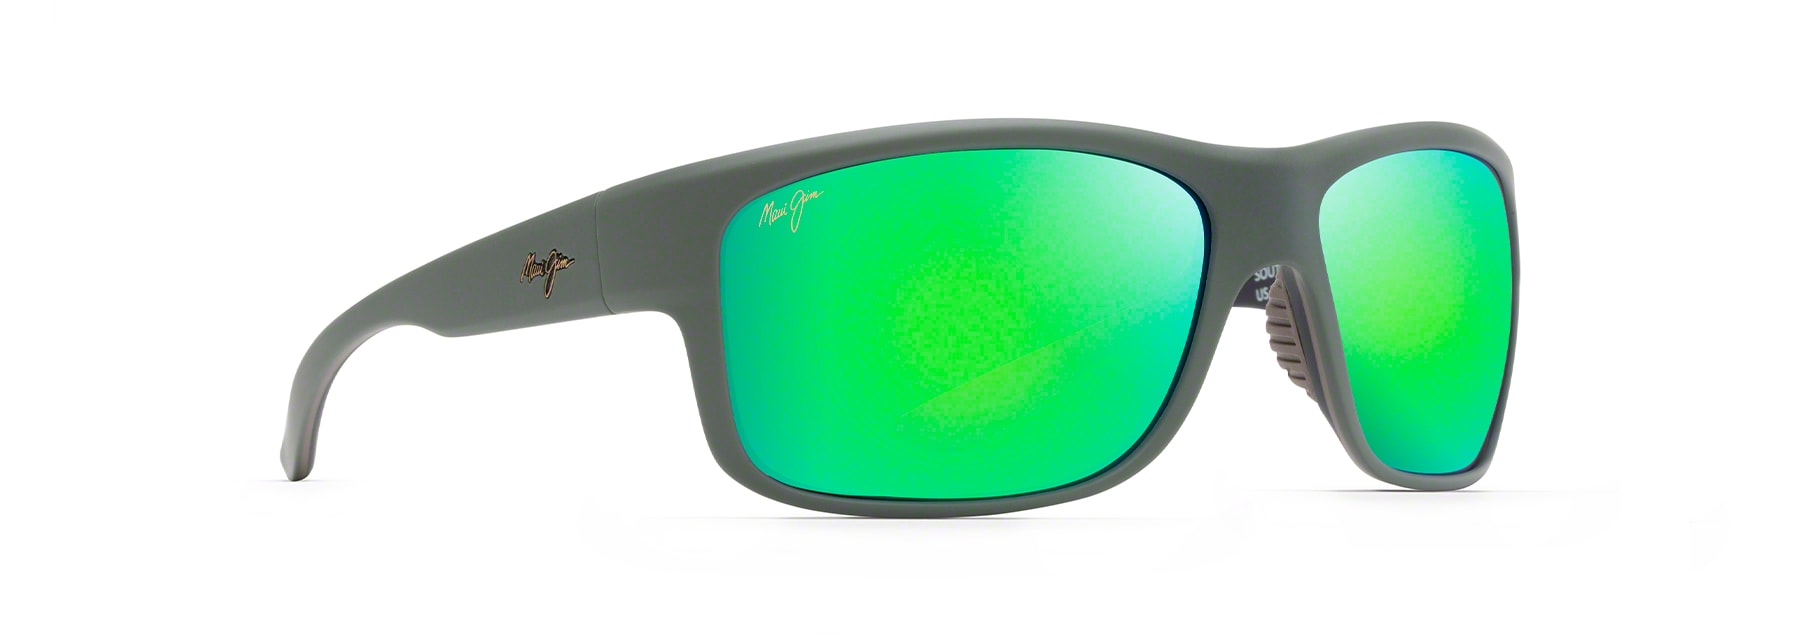 Southern Cross Polarized Sunglasses | Maui Jim®